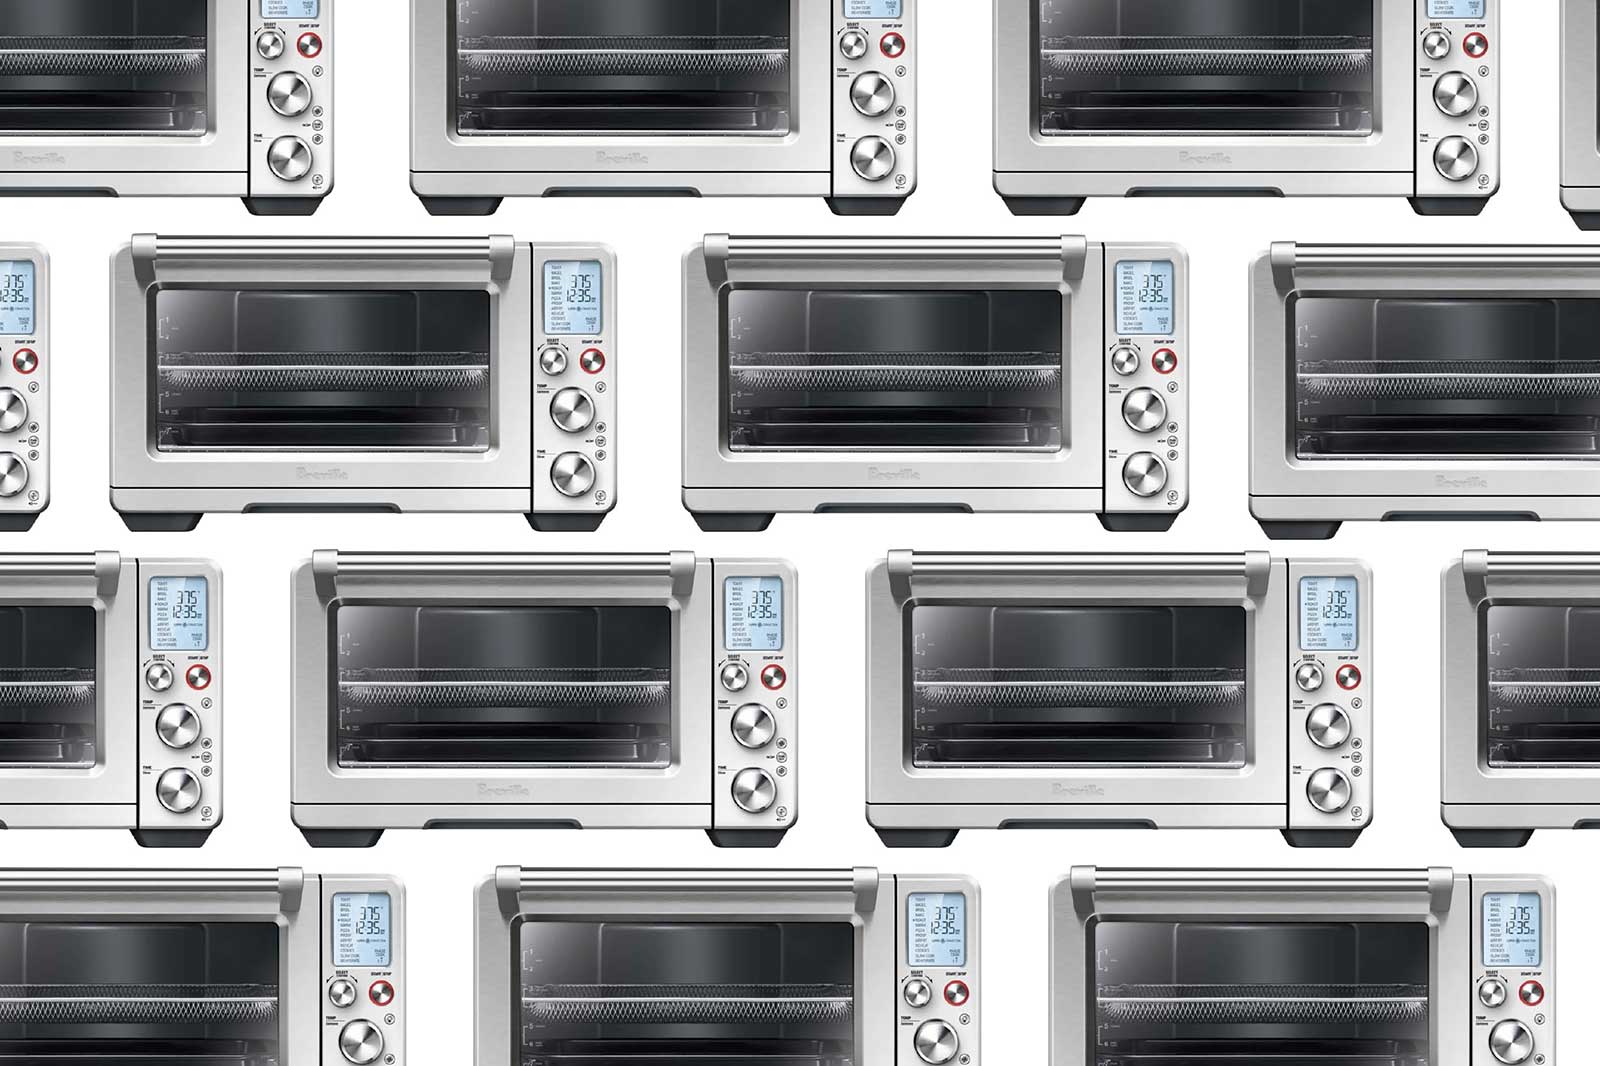 Breville Smart Air Fryer Toaster Oven on sale: Save $70